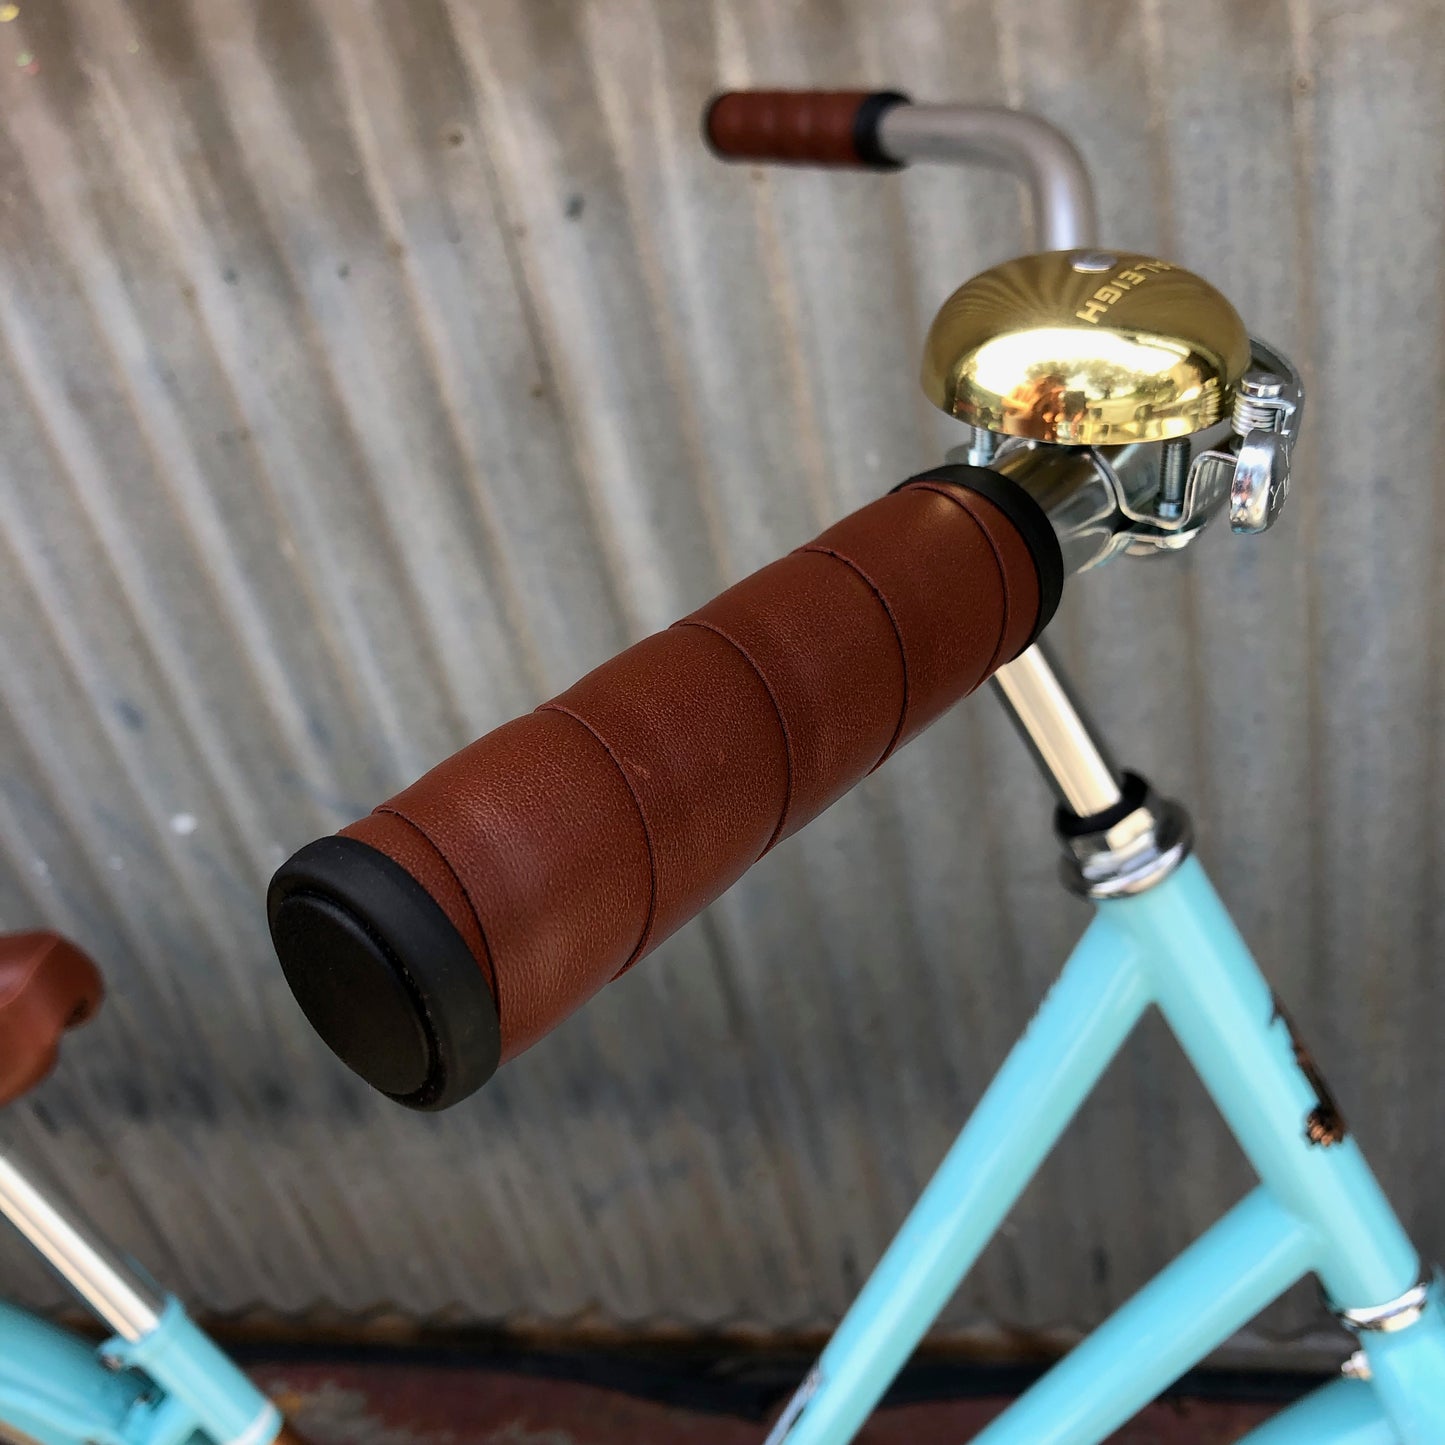 Raleigh Gala City Bike - Upright Dutch Linus Style Ride